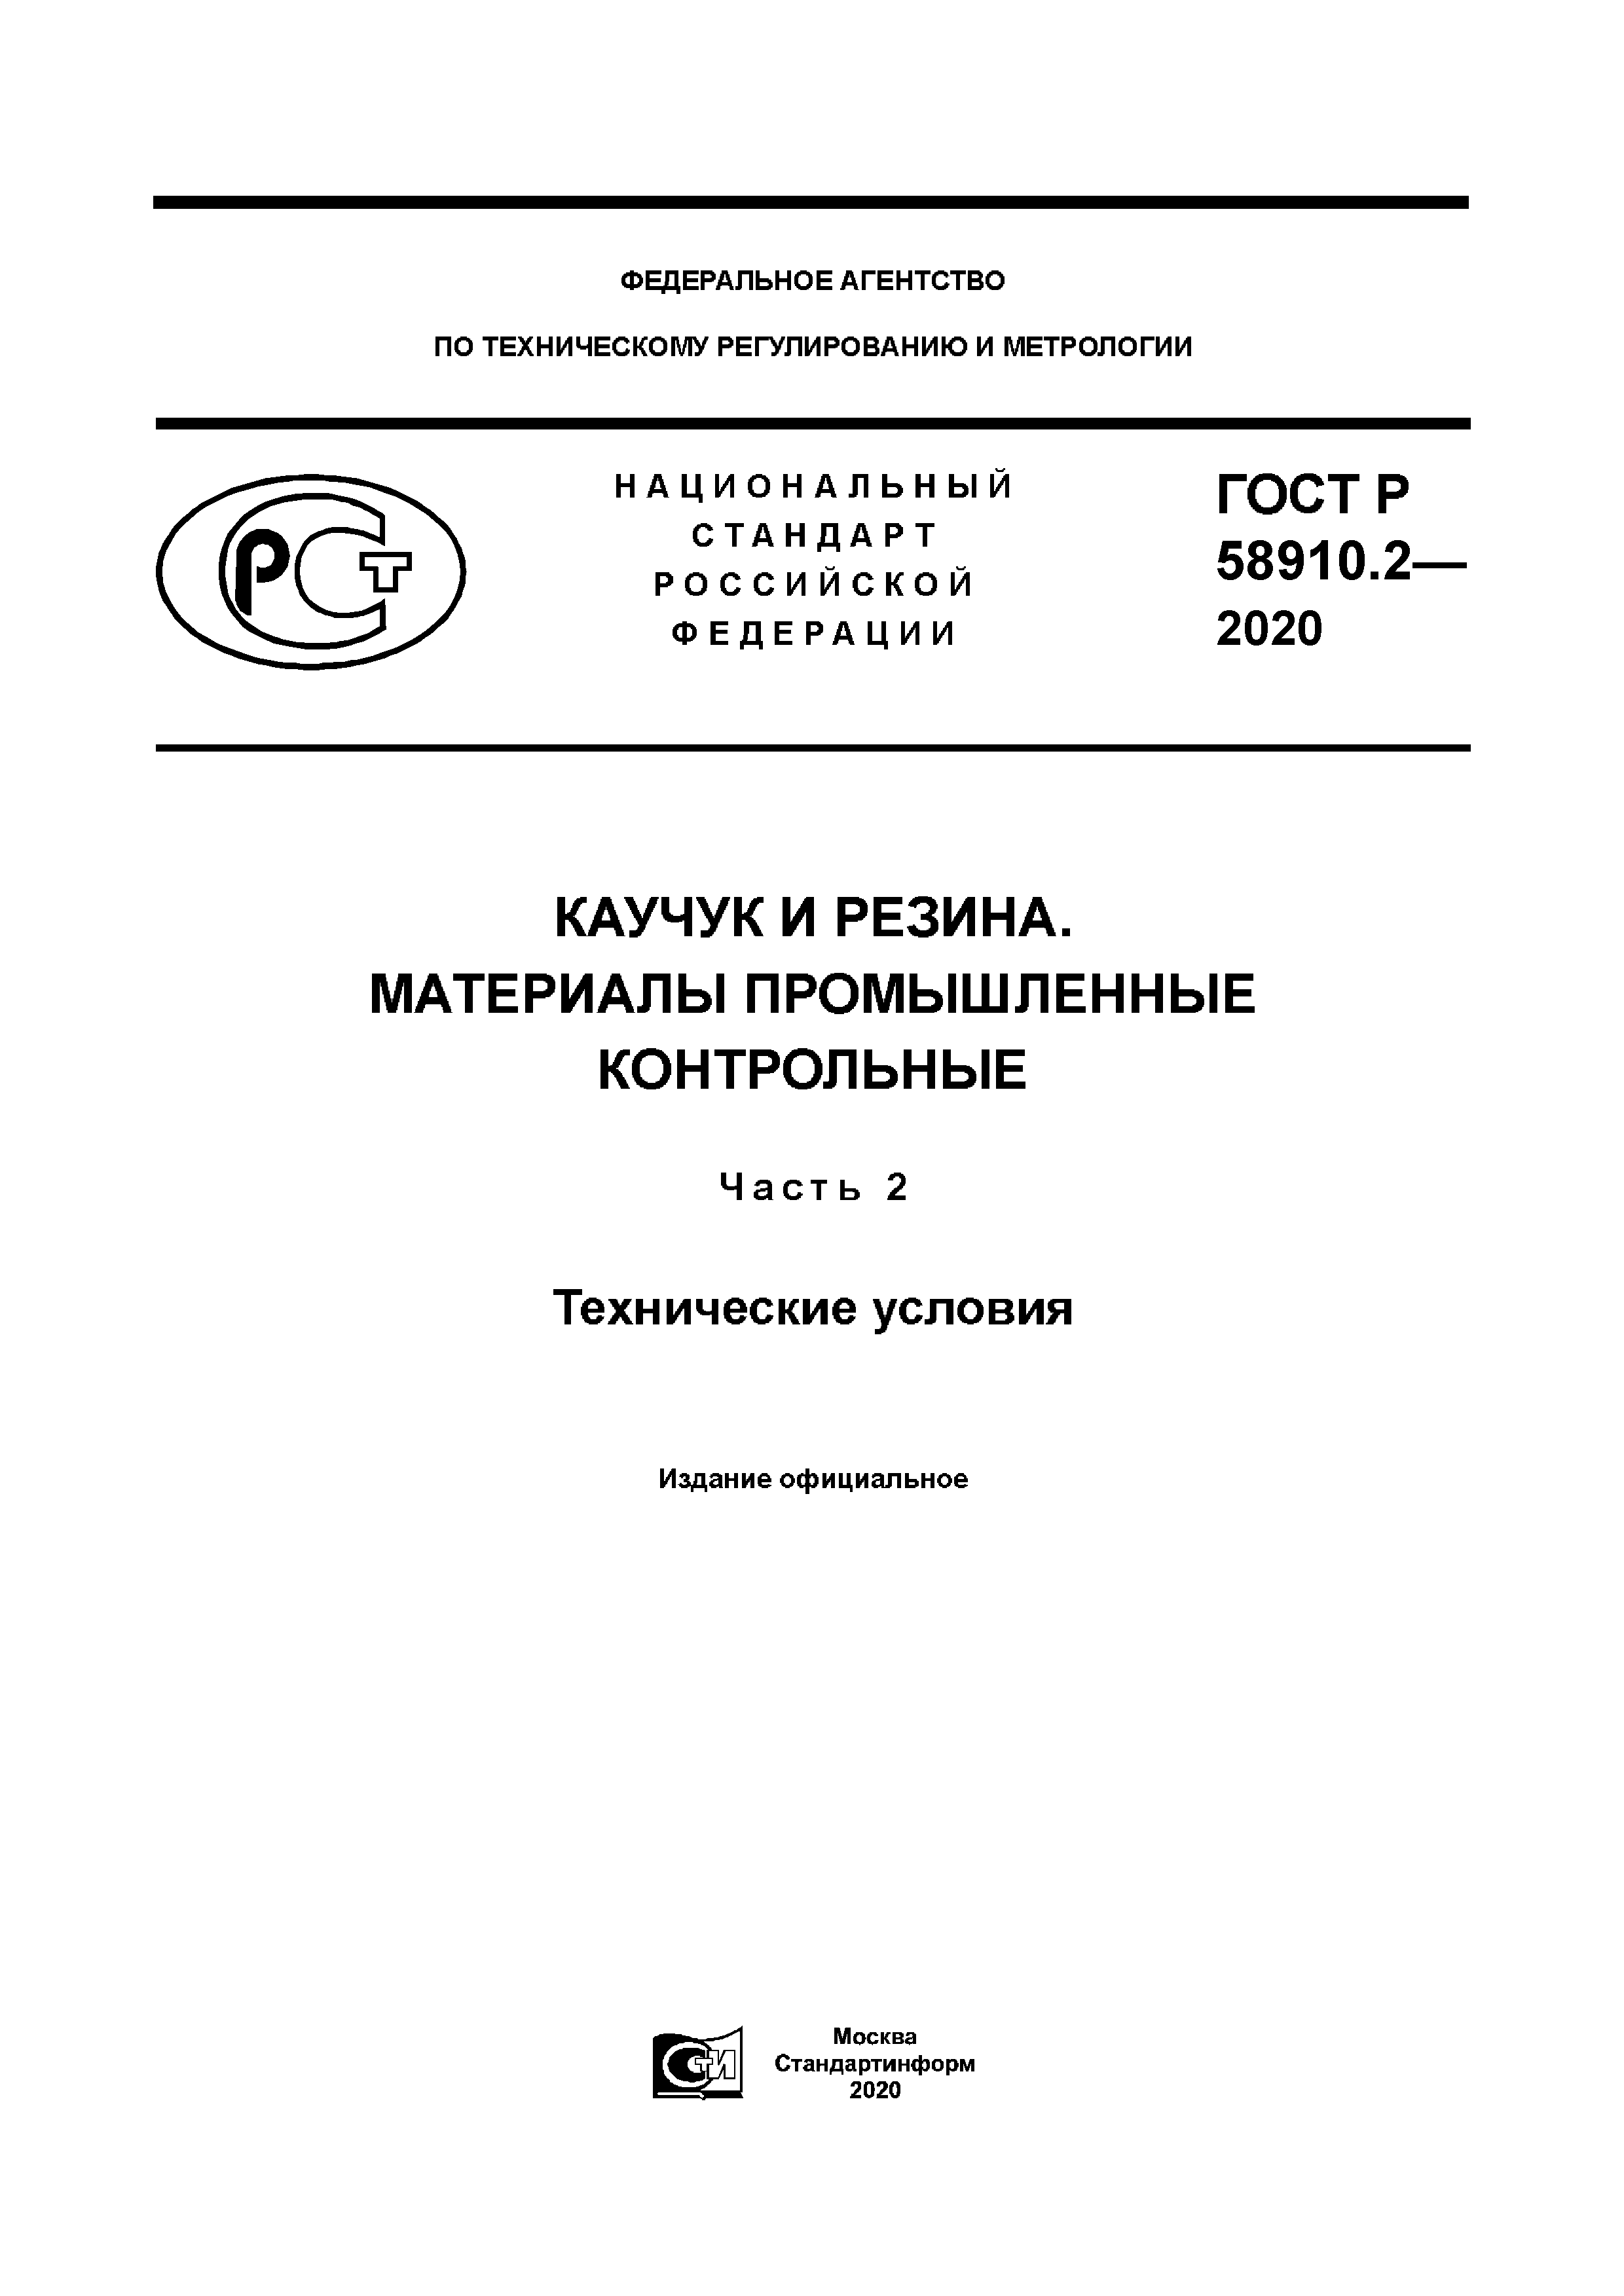 ГОСТ Р 58910.2-2020